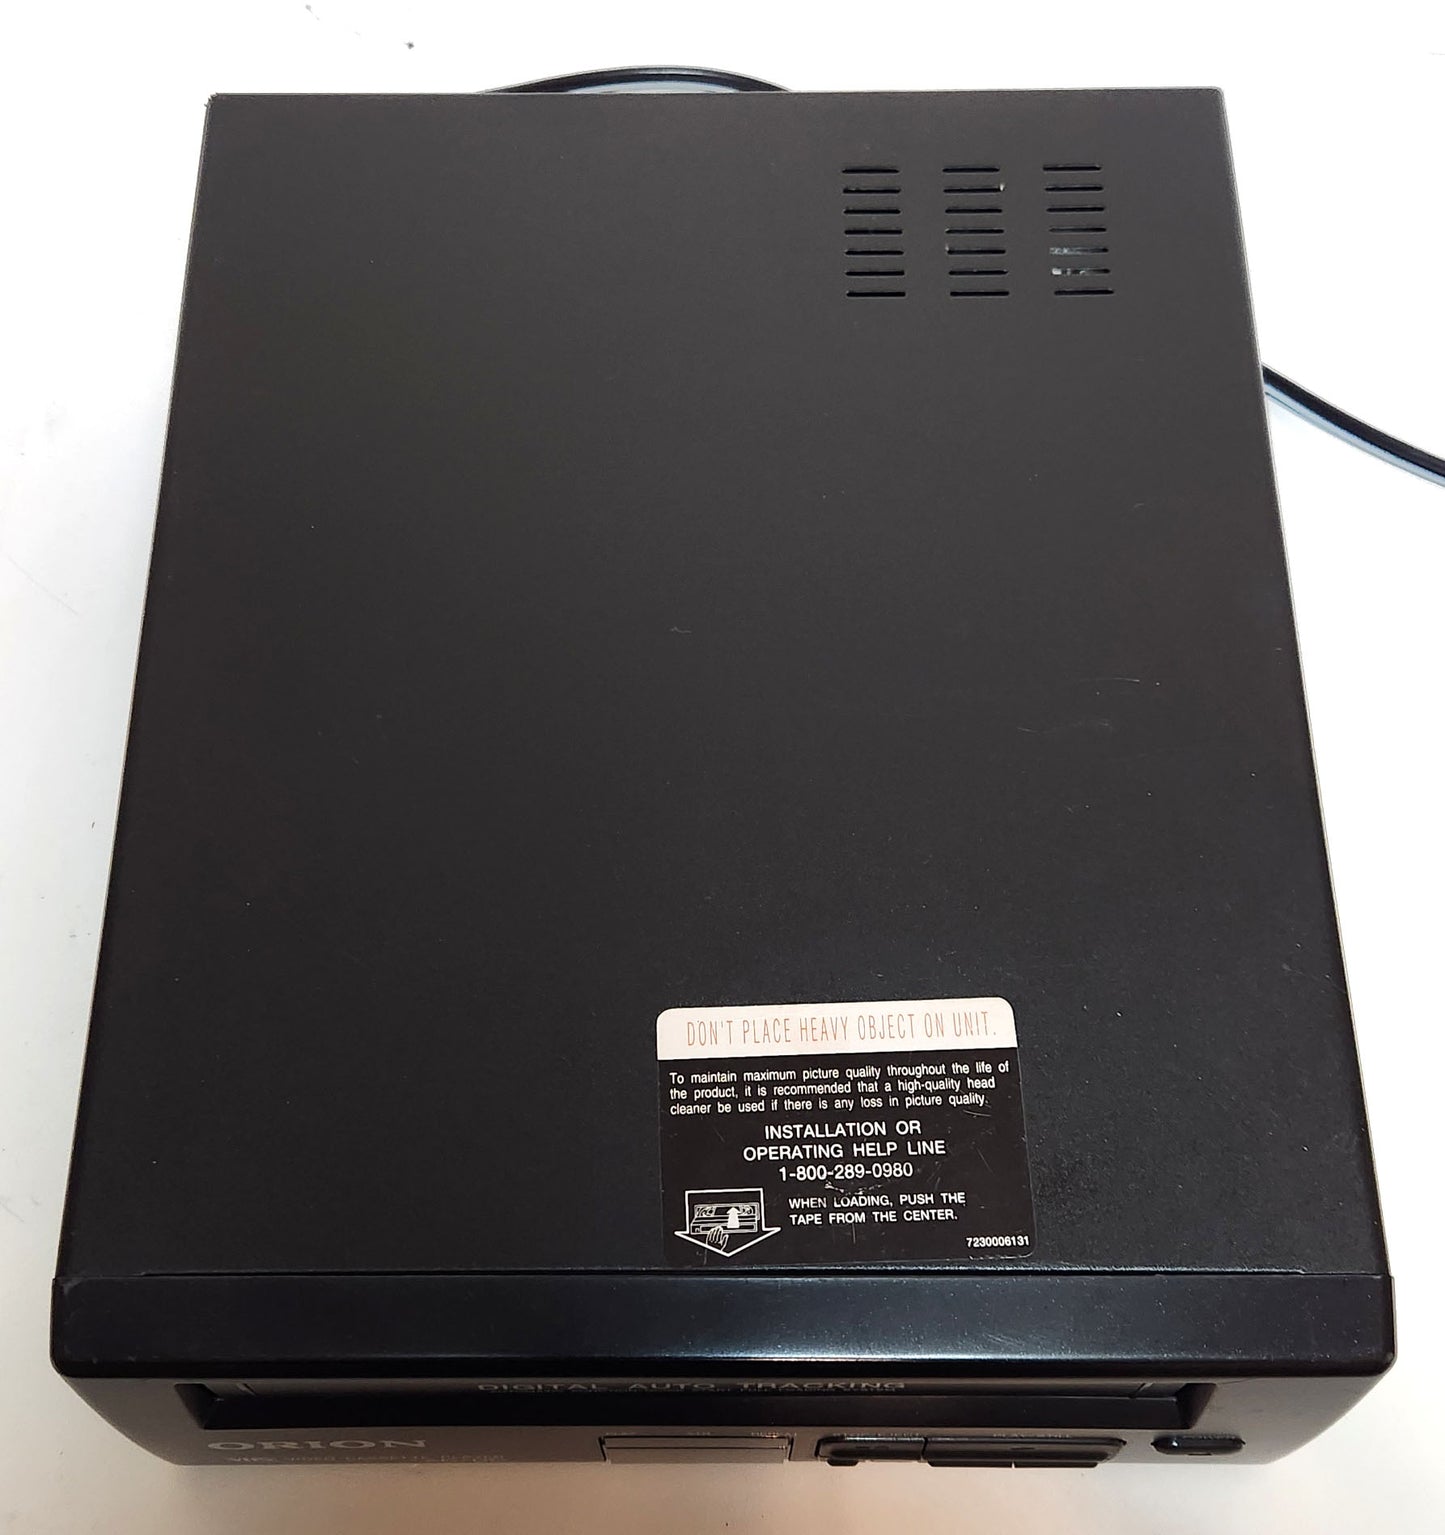 Orion VP0060 Video Cassette Player, 2-Head Mono - Top